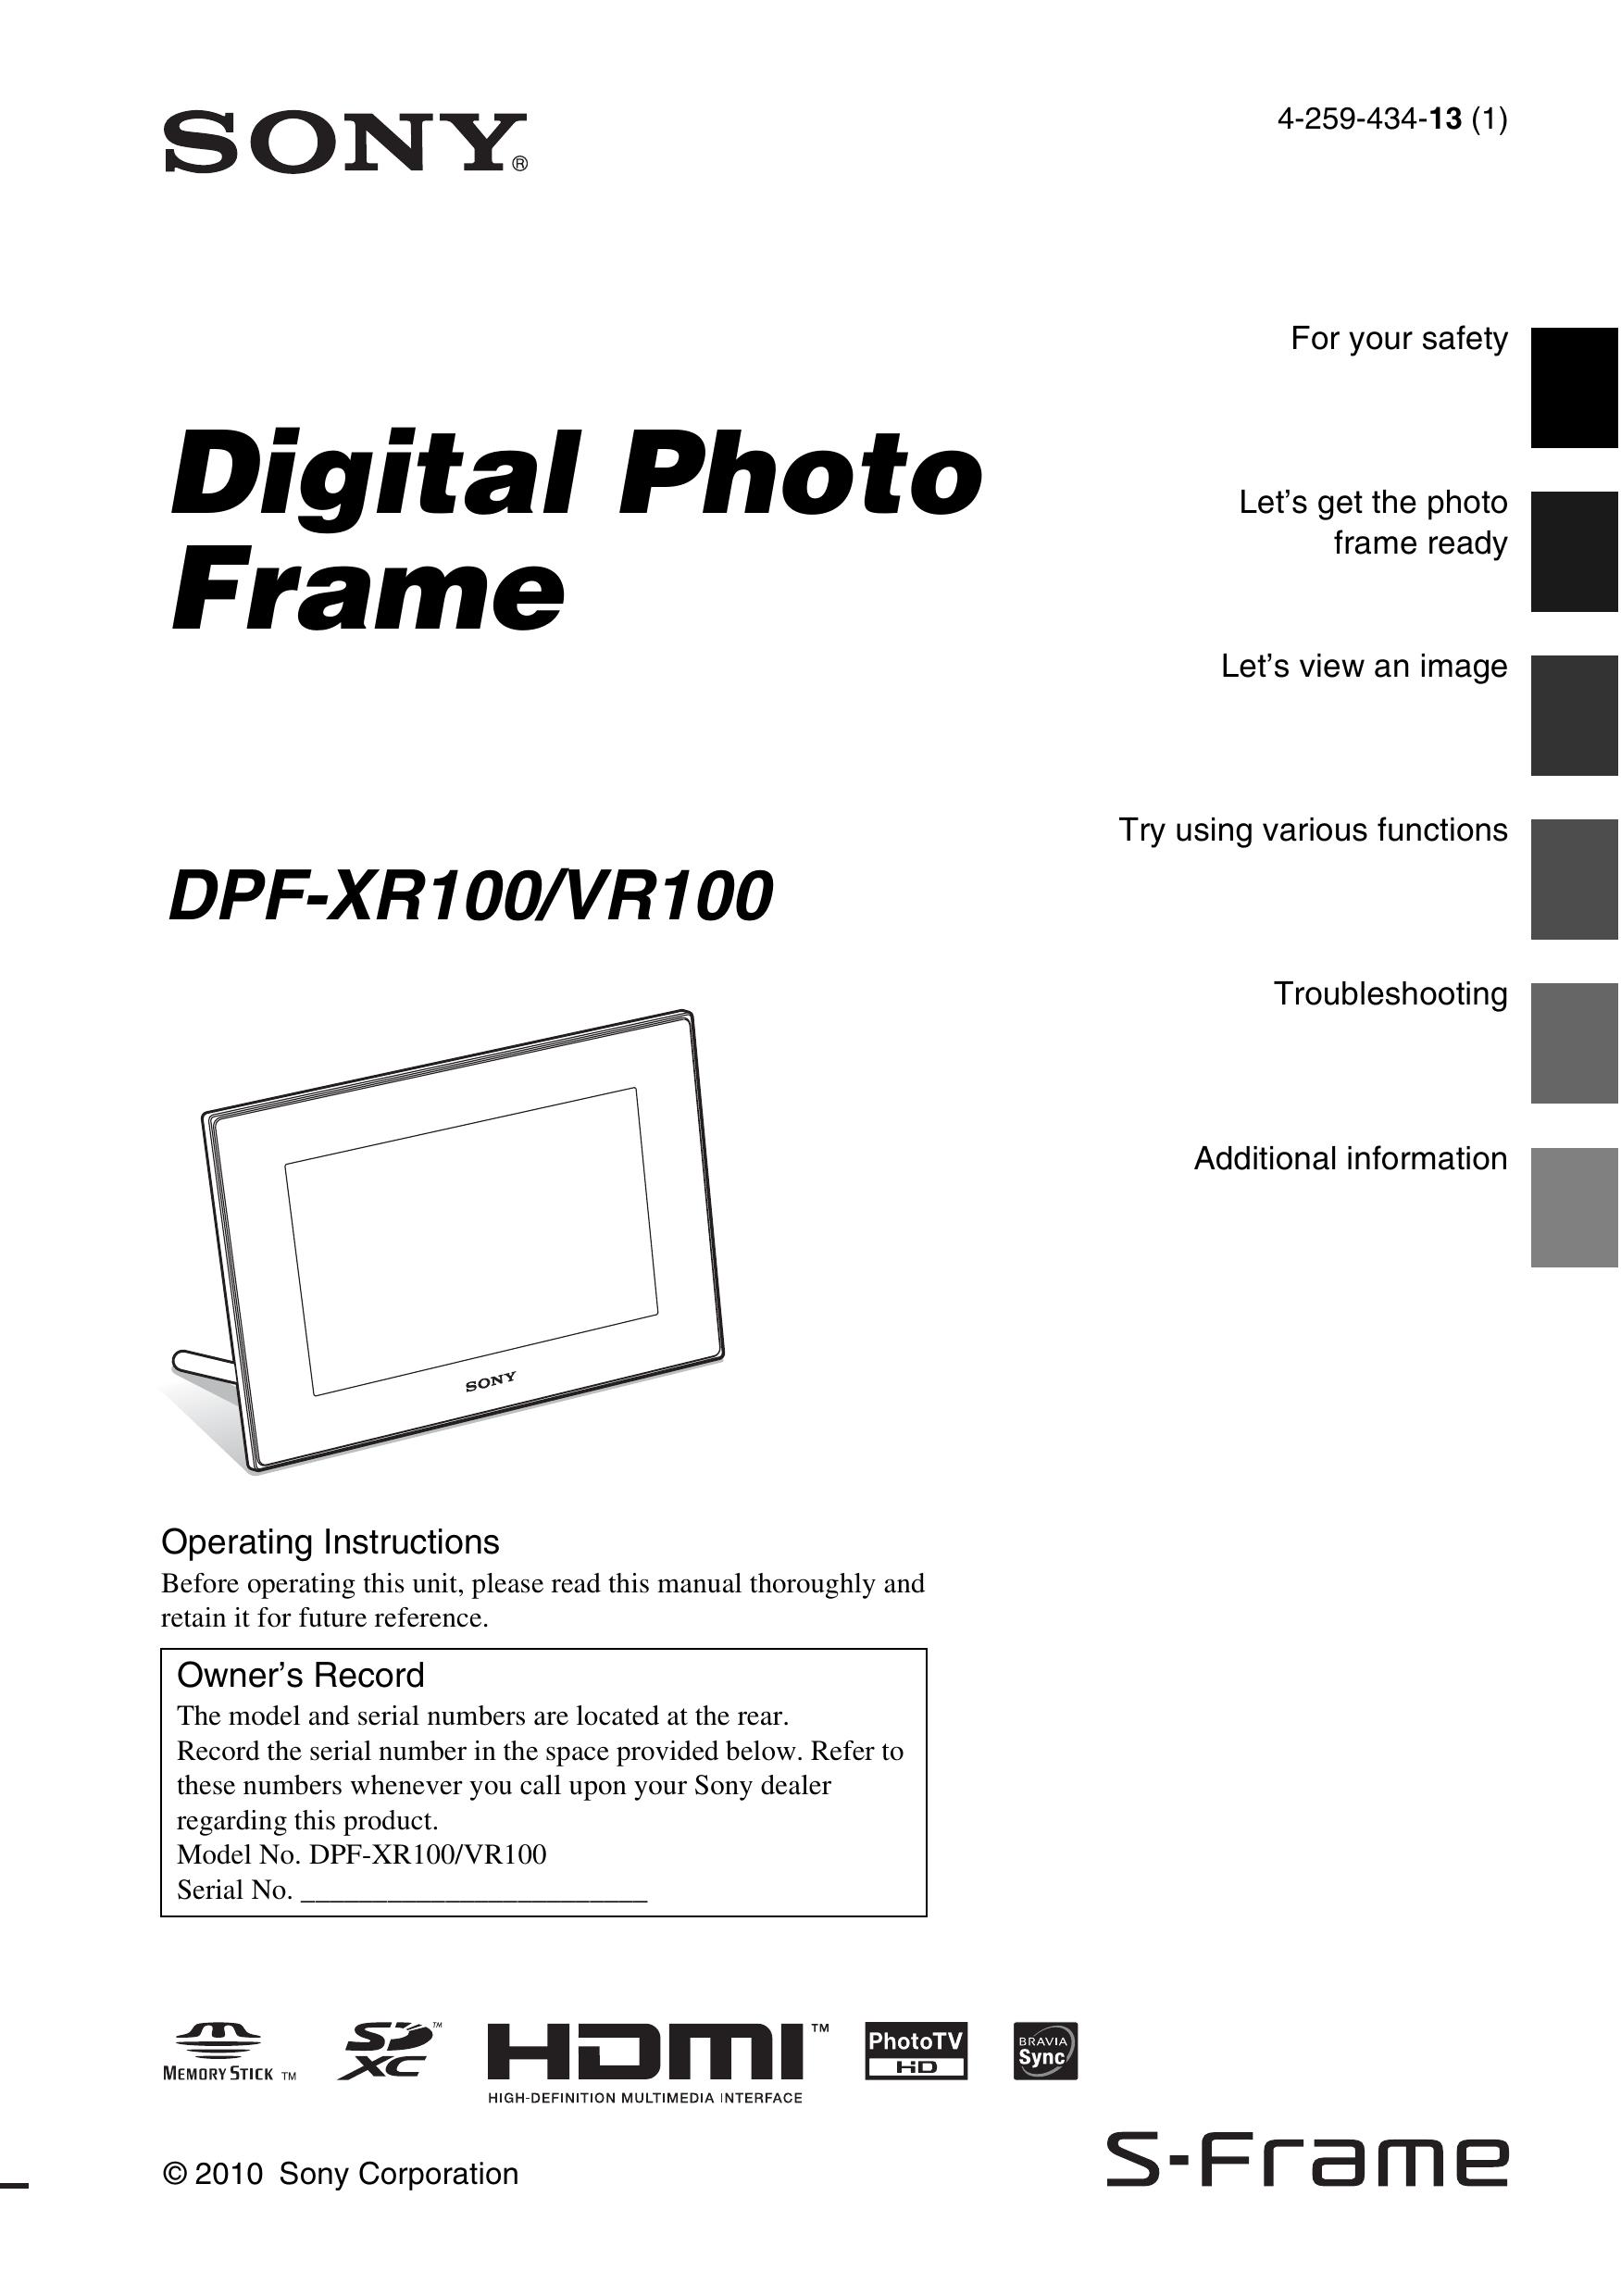 Sony 4-259-434-13 (1) Digital Photo Frame User Manual